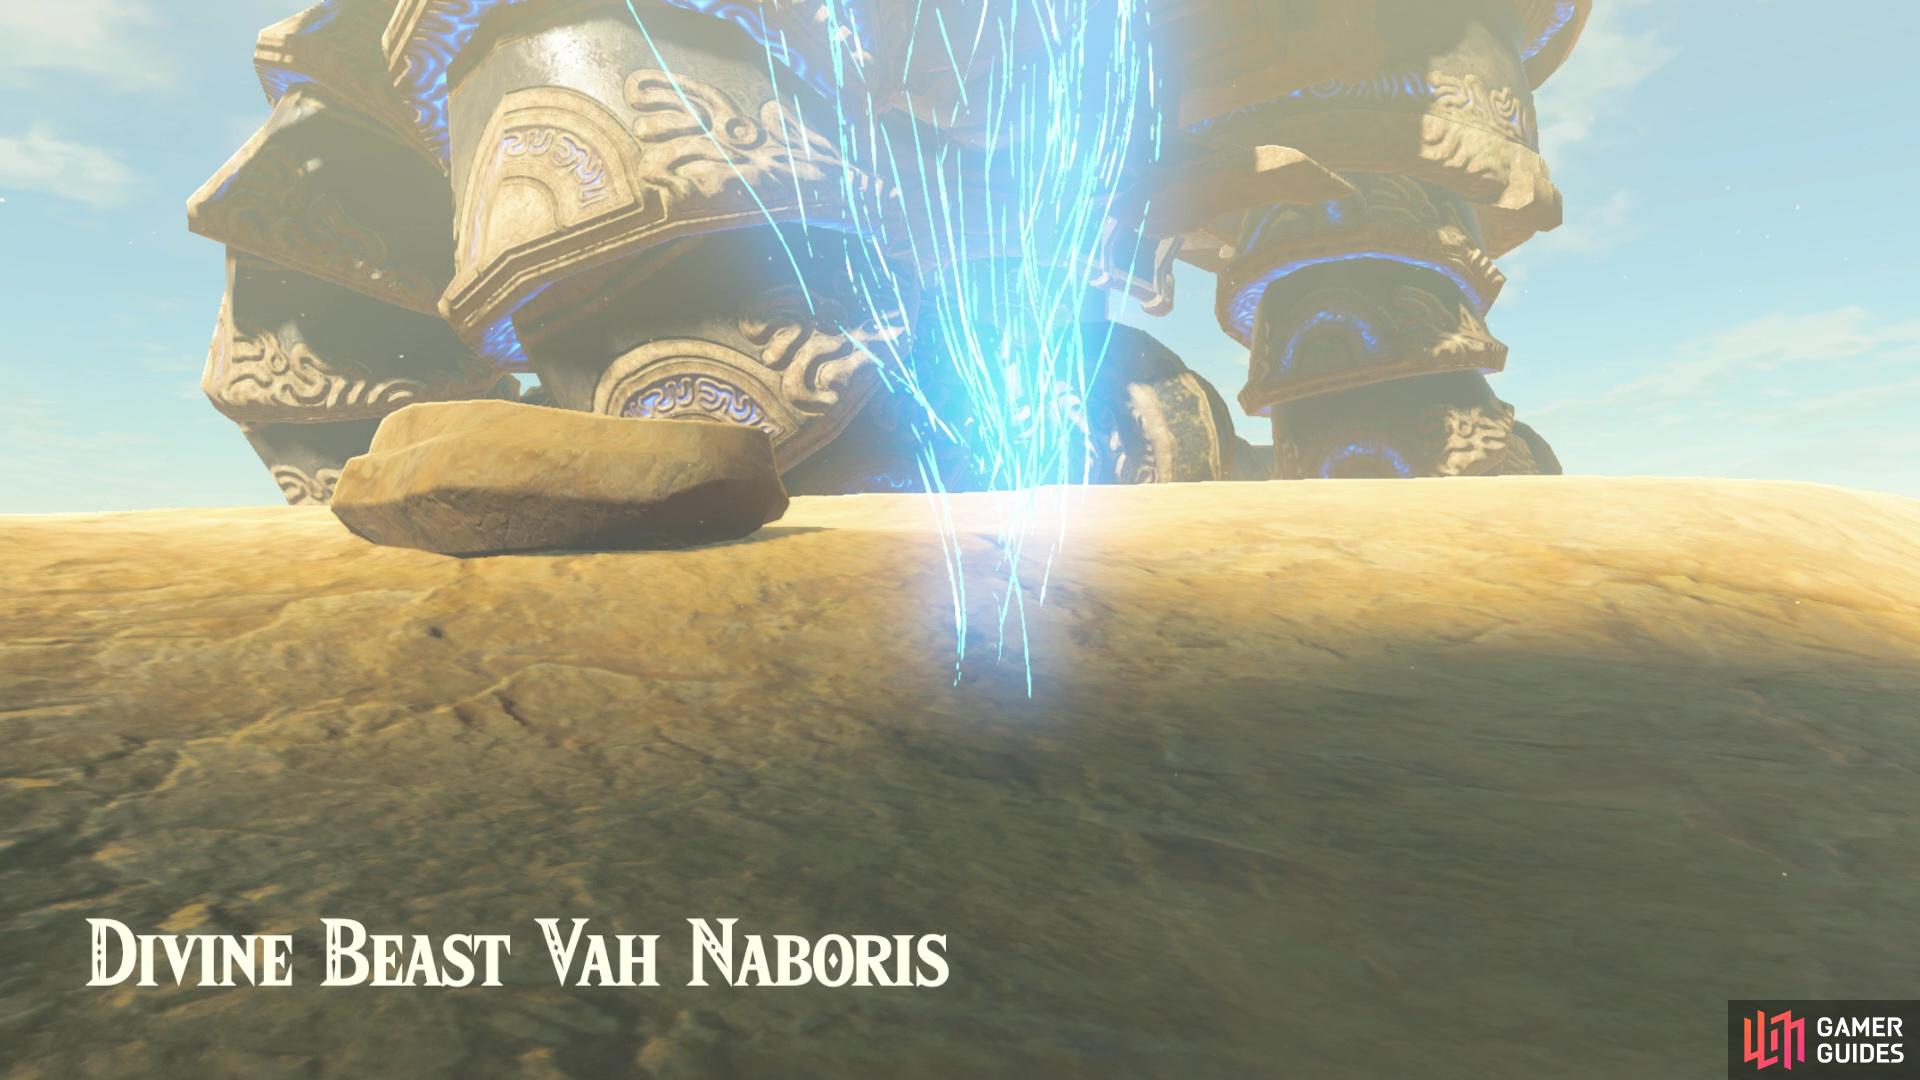 Return to Vah Naboris!